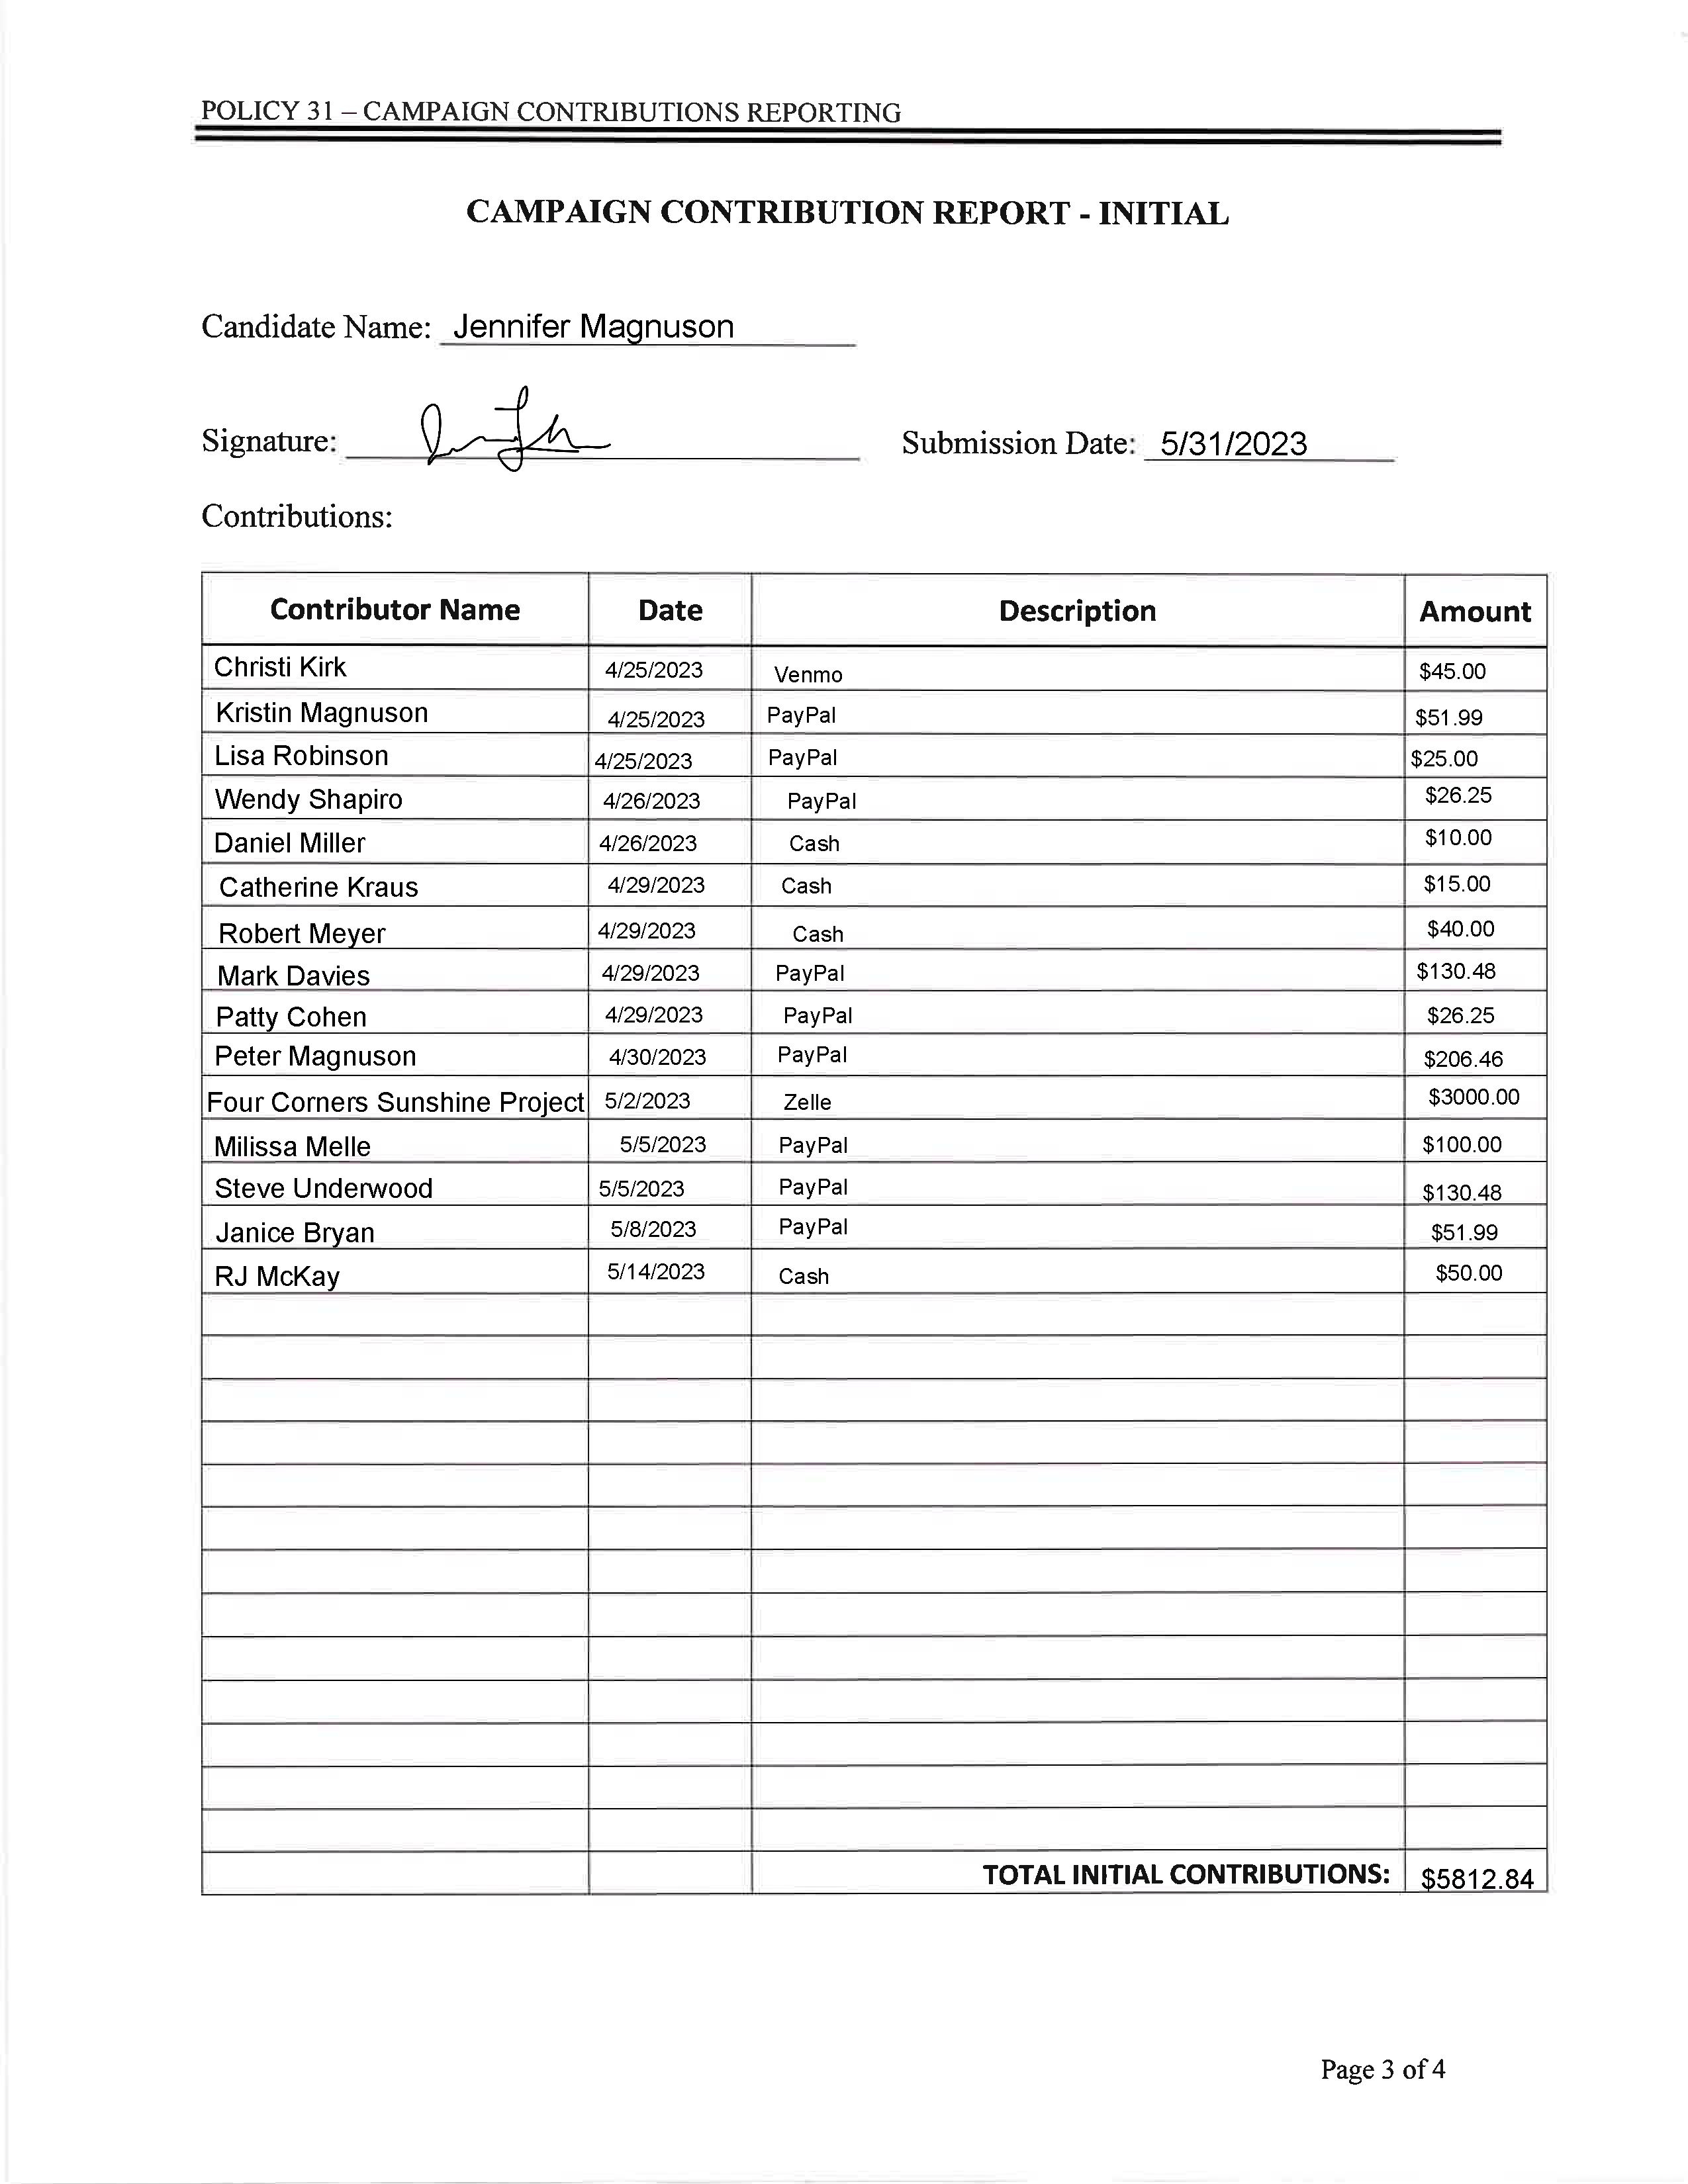 Jennifer Magnuson Initial Campaign Contribution Report page 2